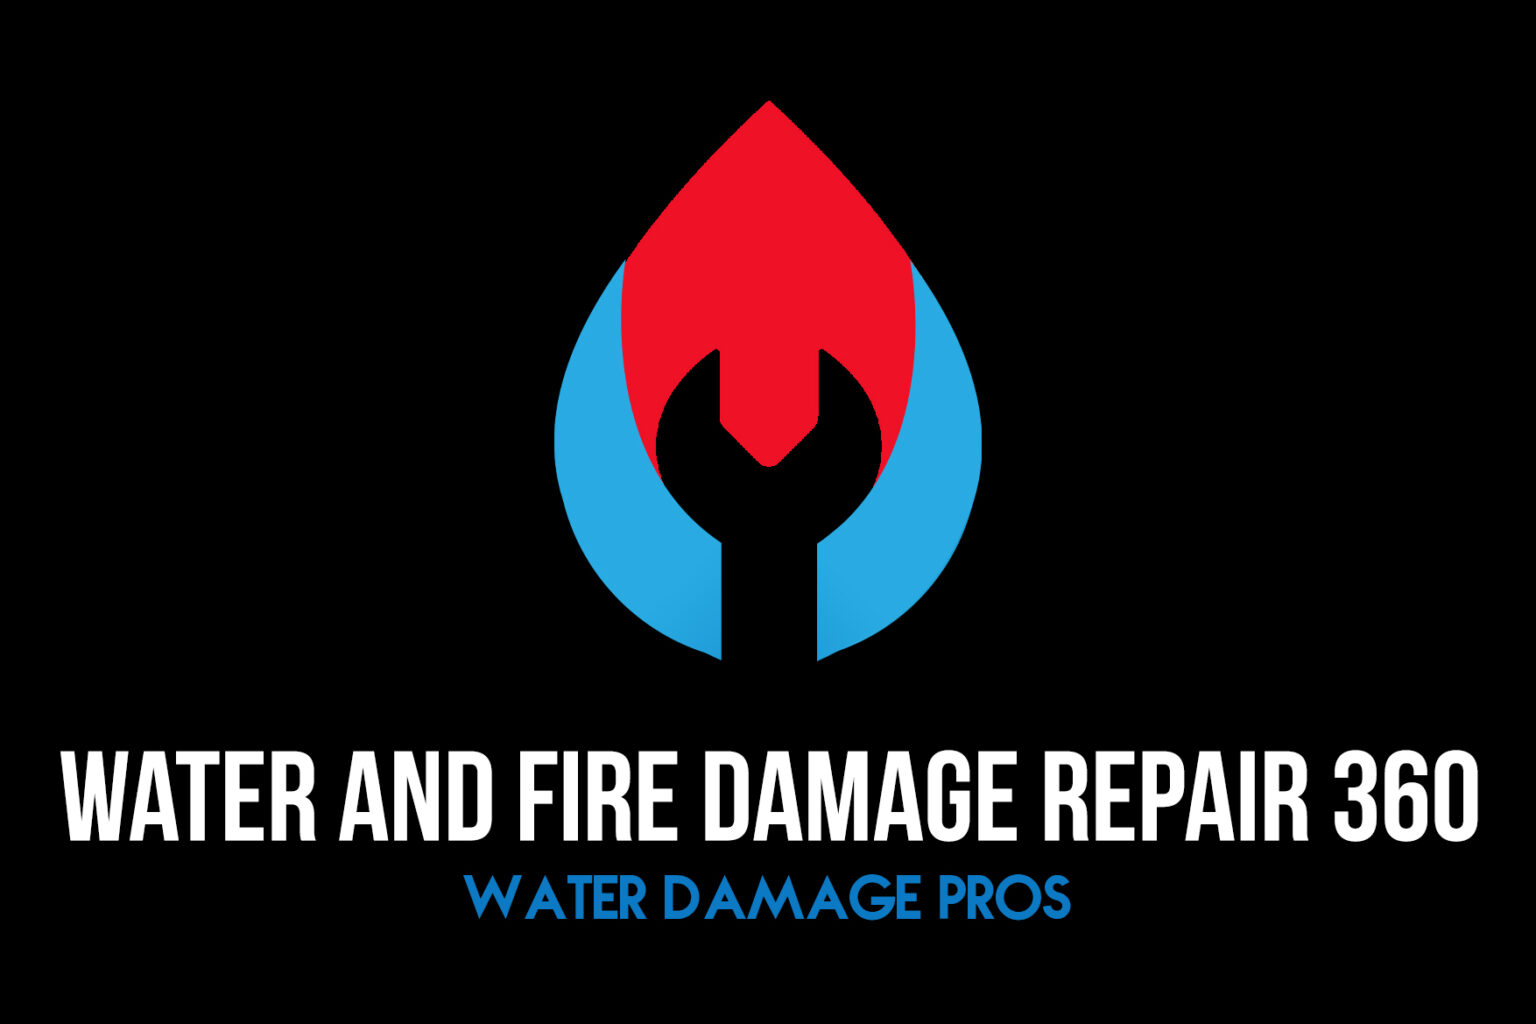 Water and Fire Damage Repair 360 – Water and Fire Damage Repair 360